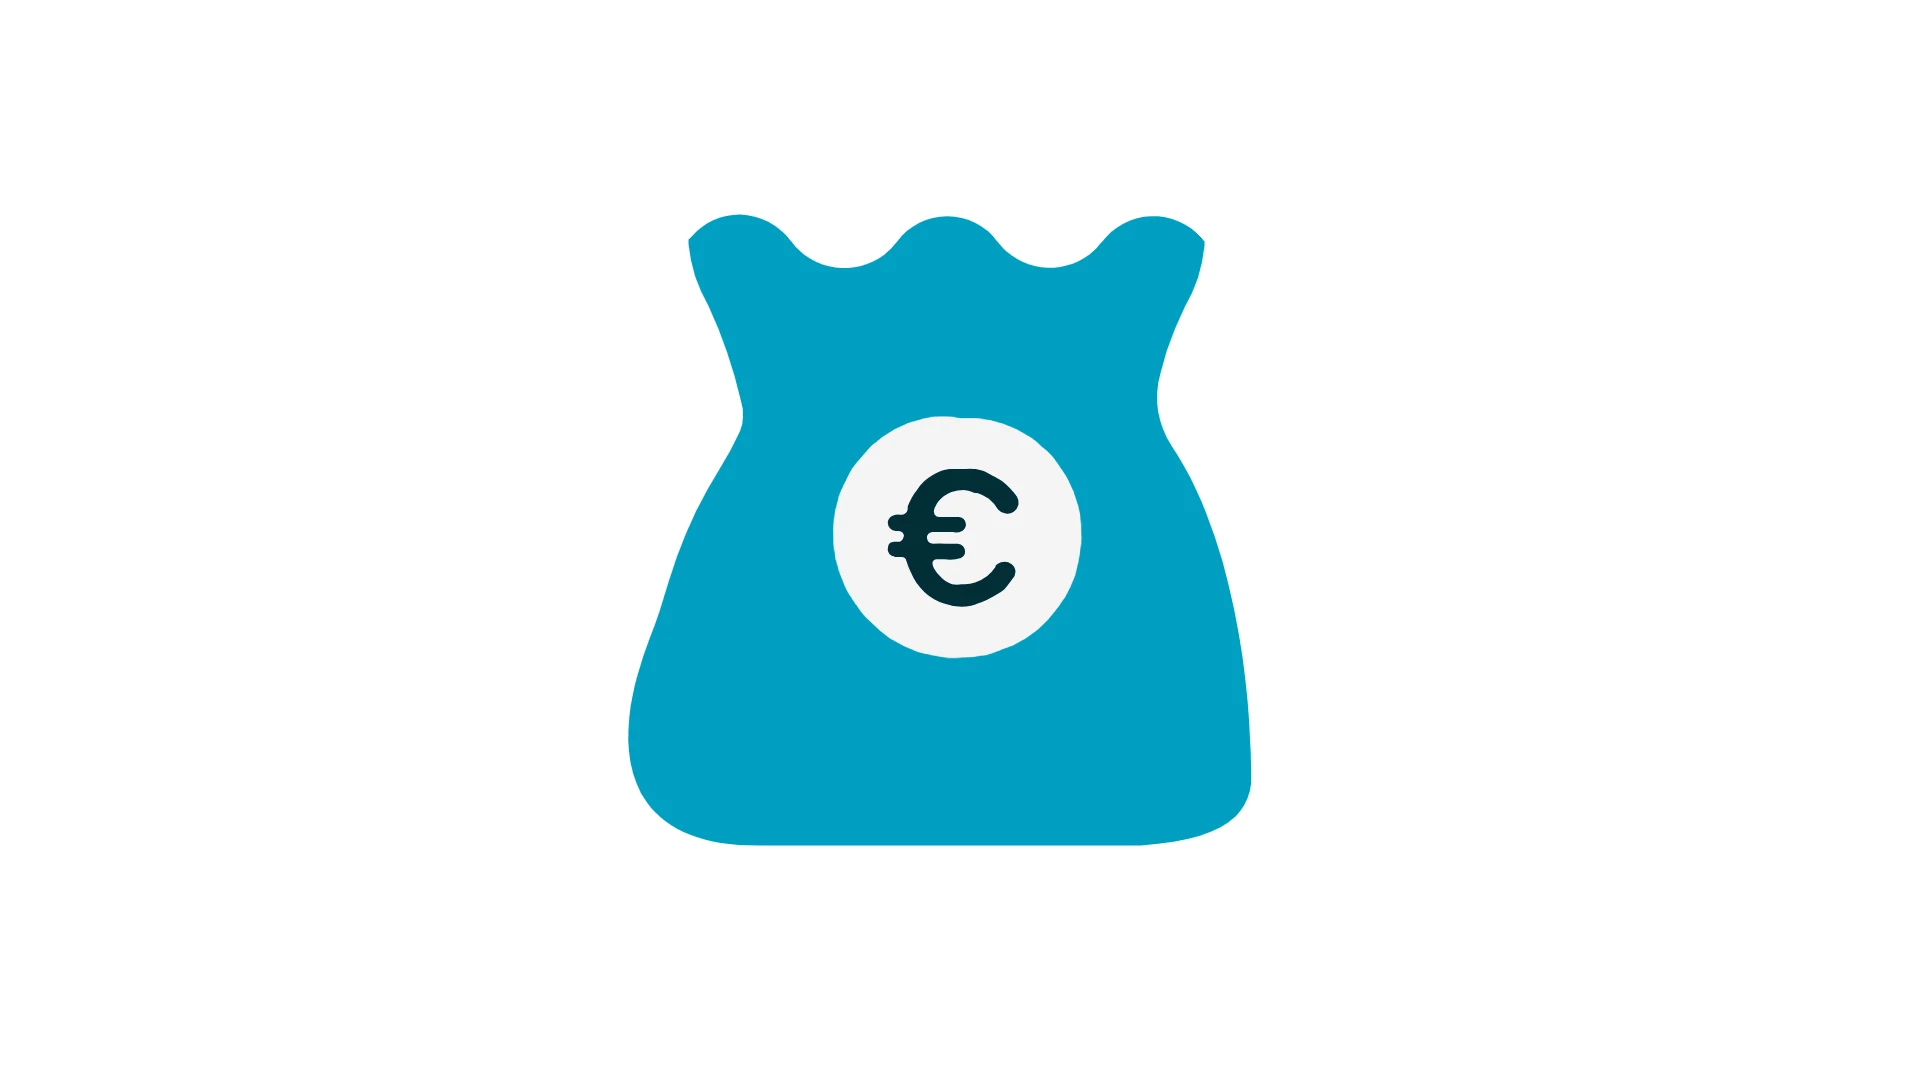 Bag with Euro symbol